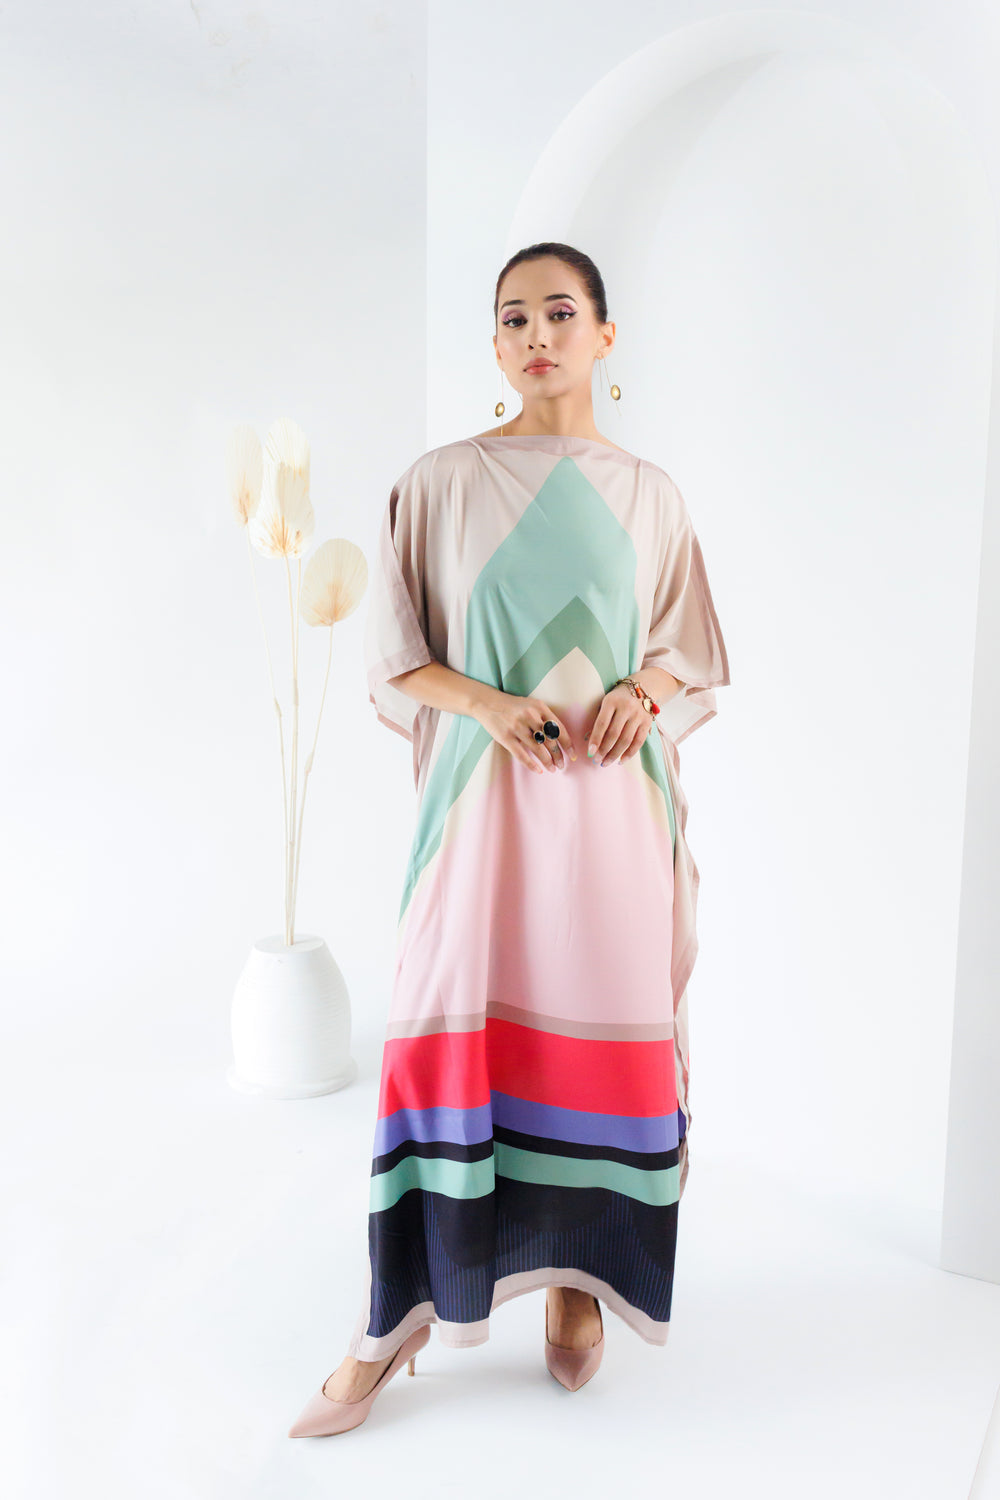 Long kaftan dress for women painted in subtle multicolored pastels